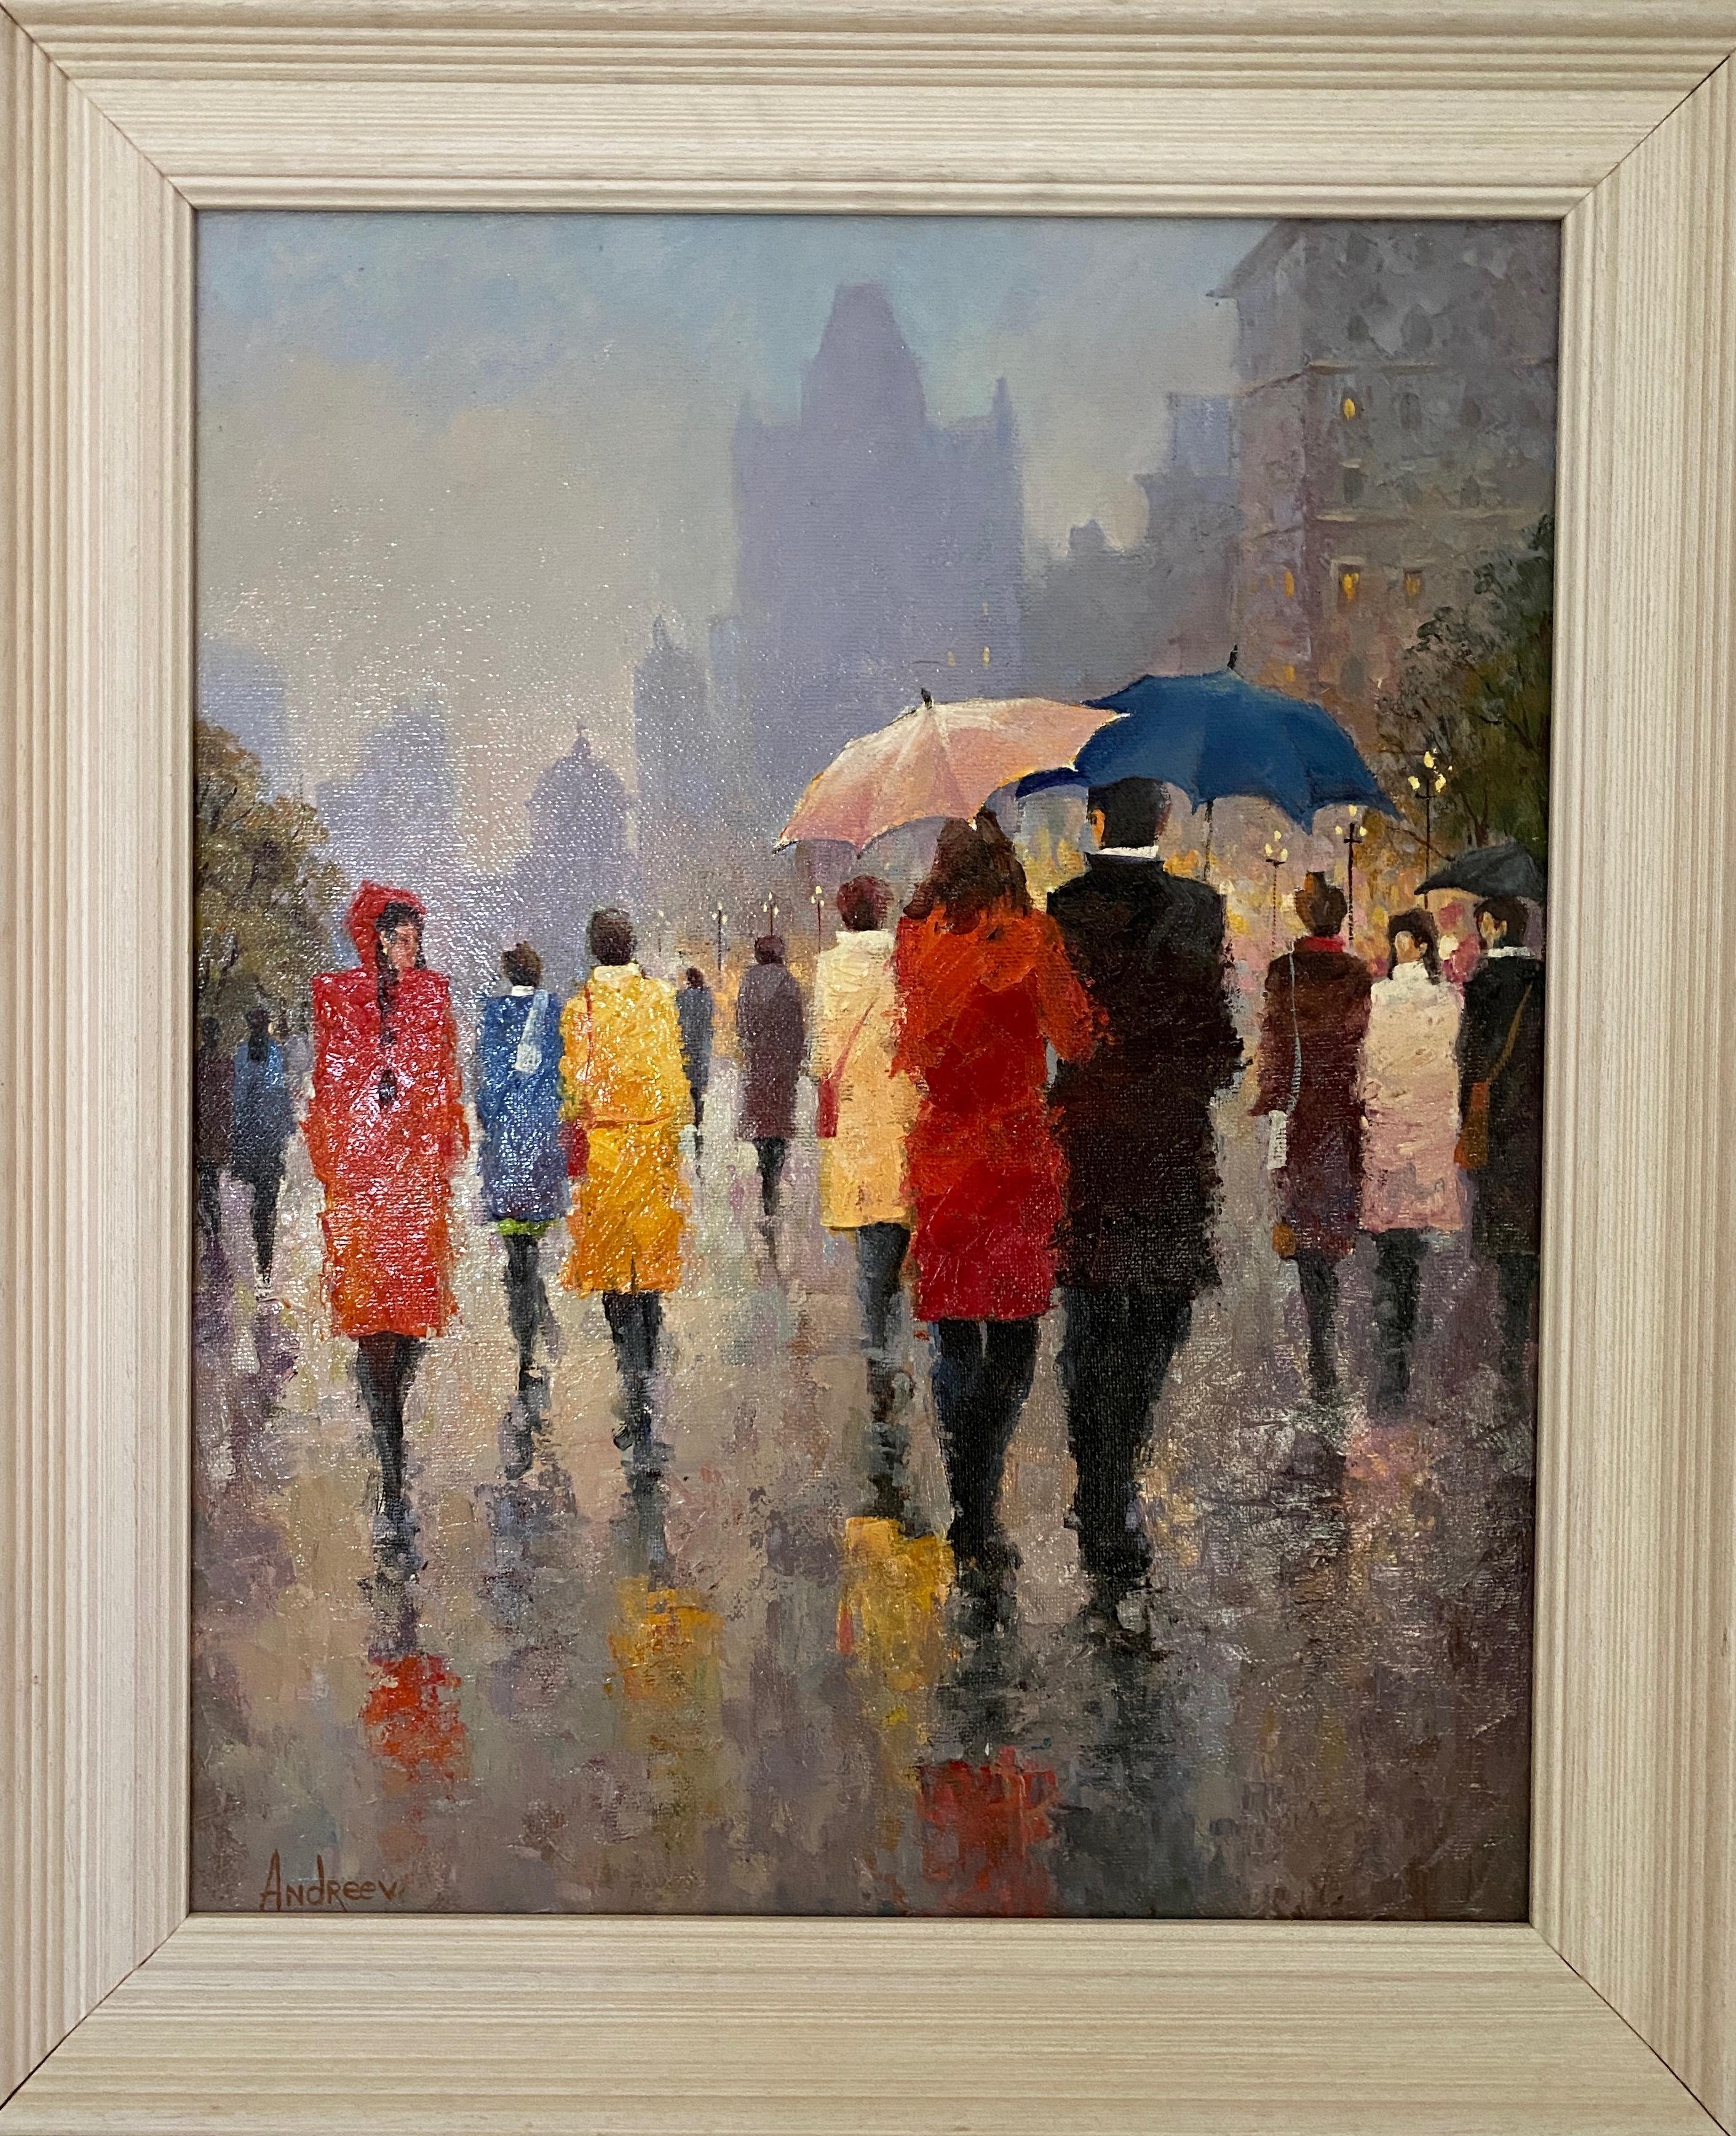 Rainy day. Oil on canvas. Impressionistic colorful street scene. 7